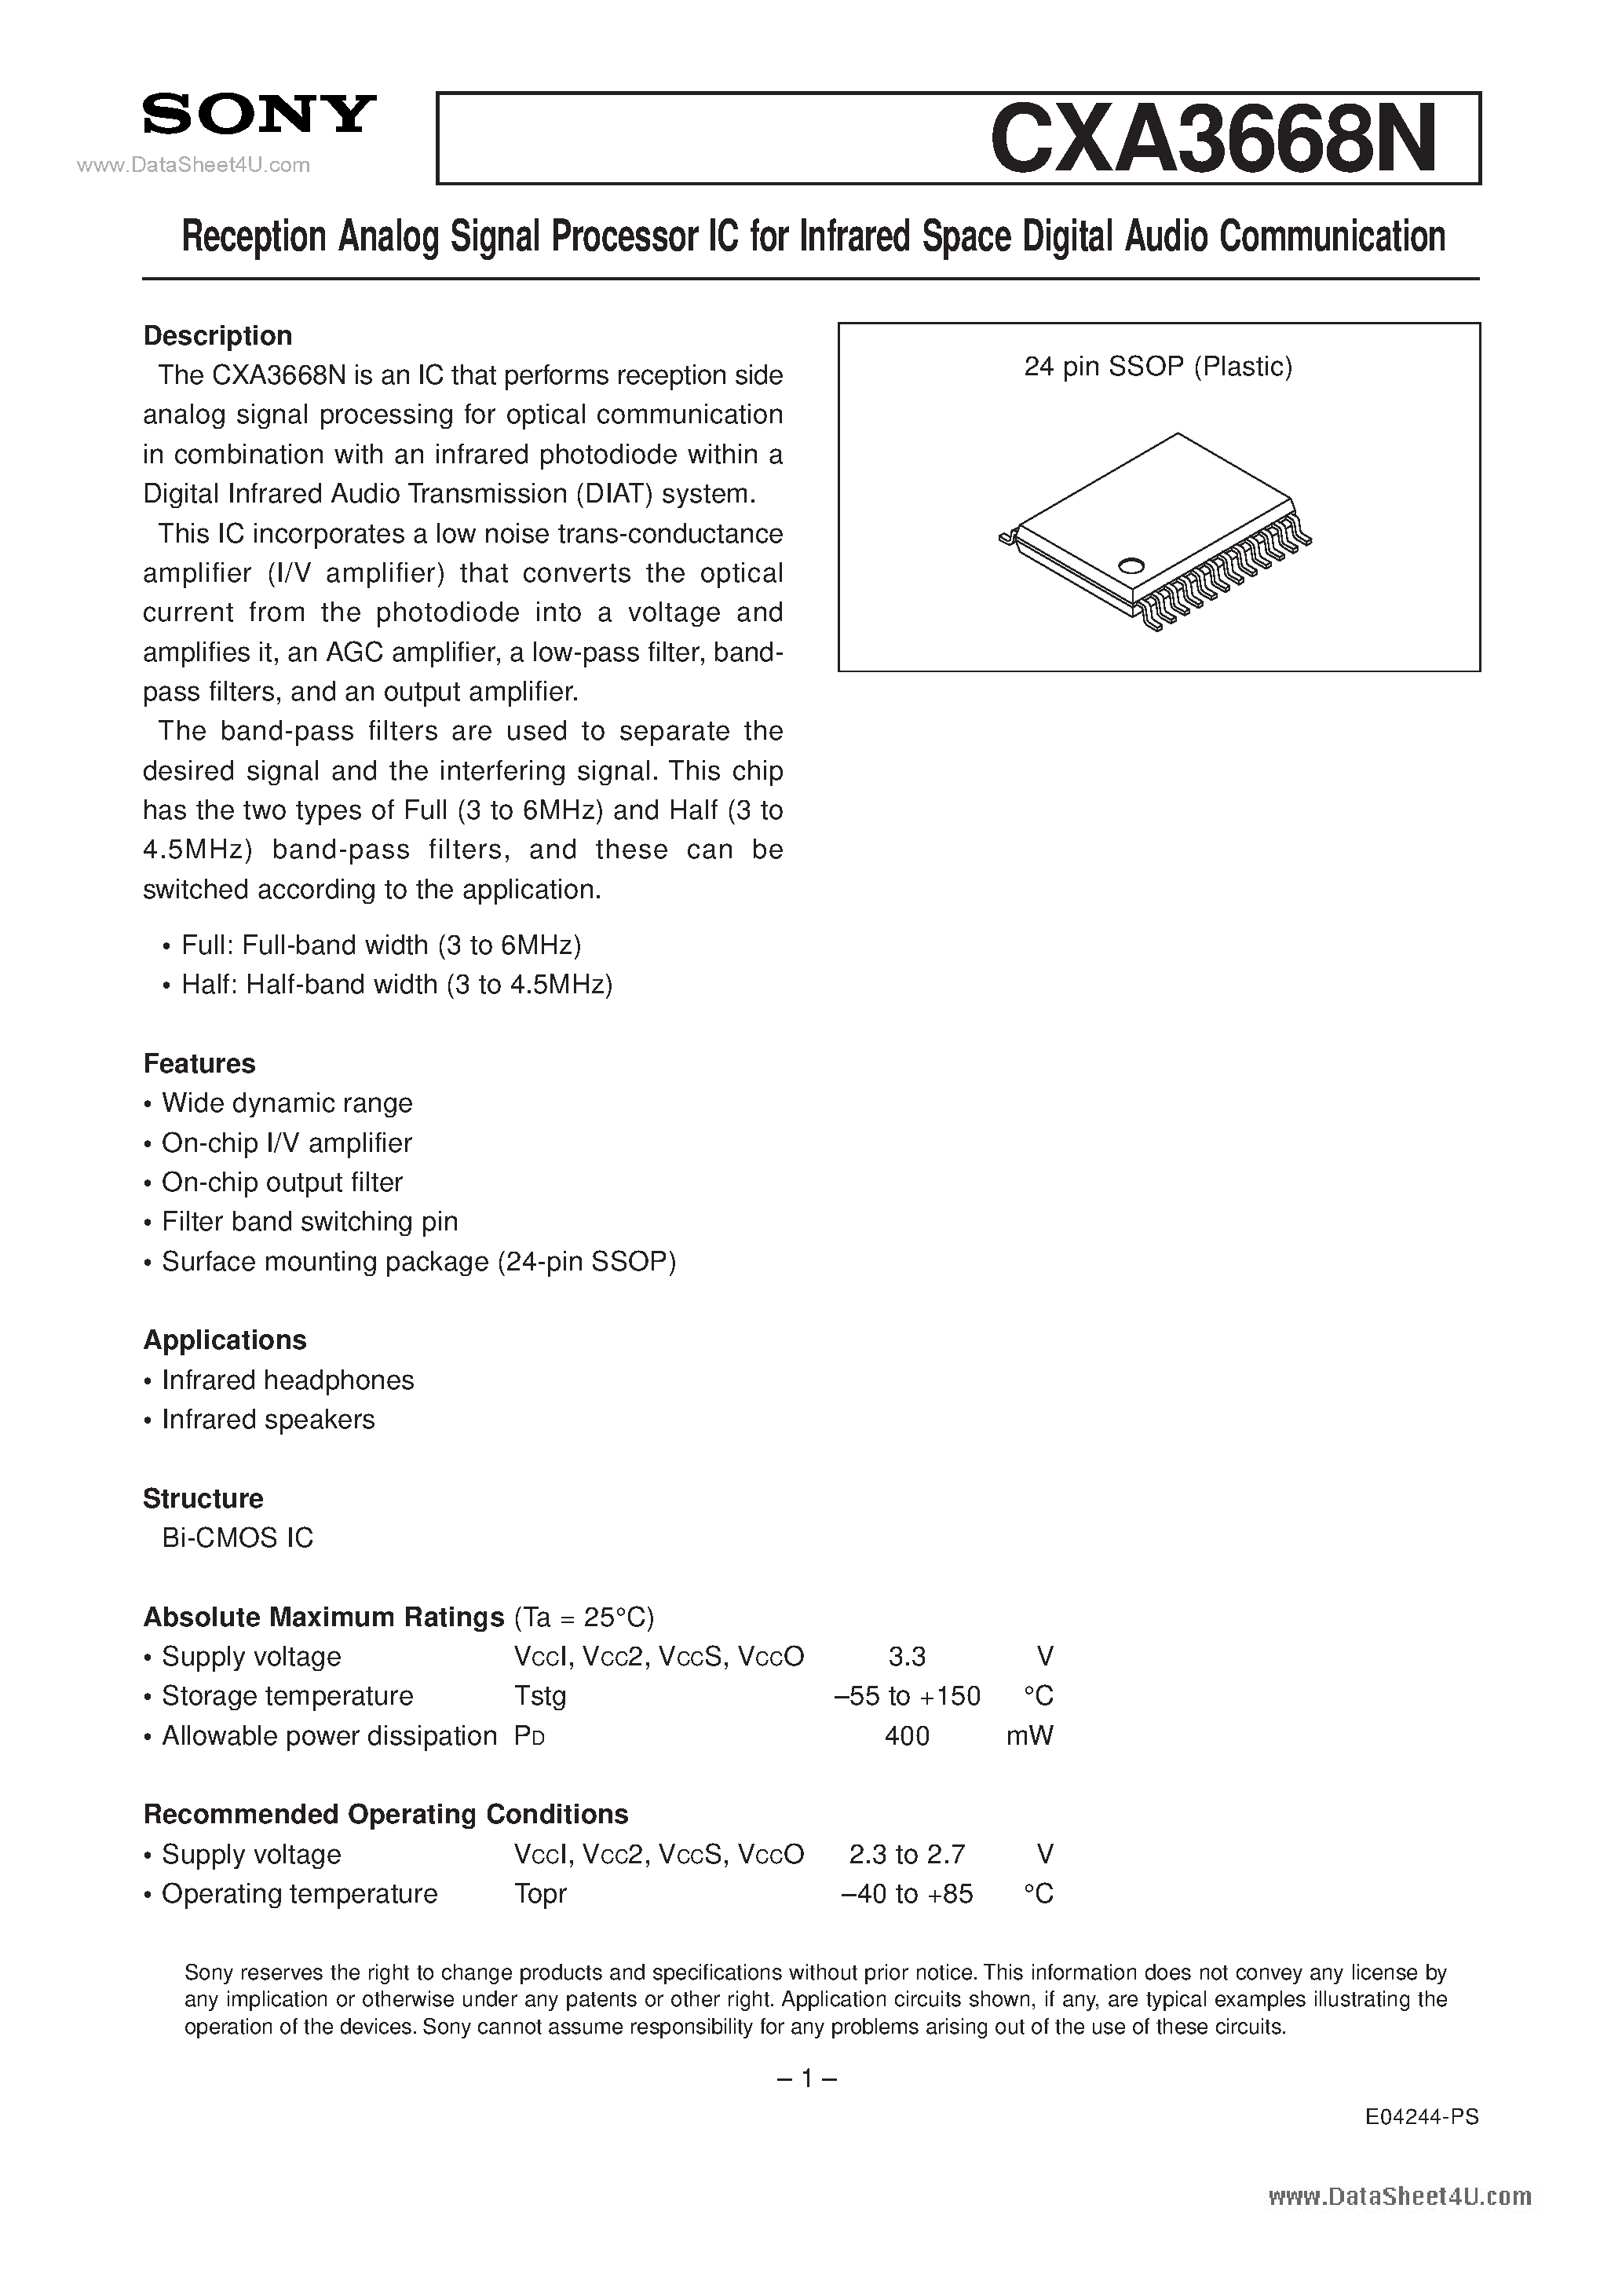 Даташит CXA3668N - Reception Analog Signal Processor IC страница 1